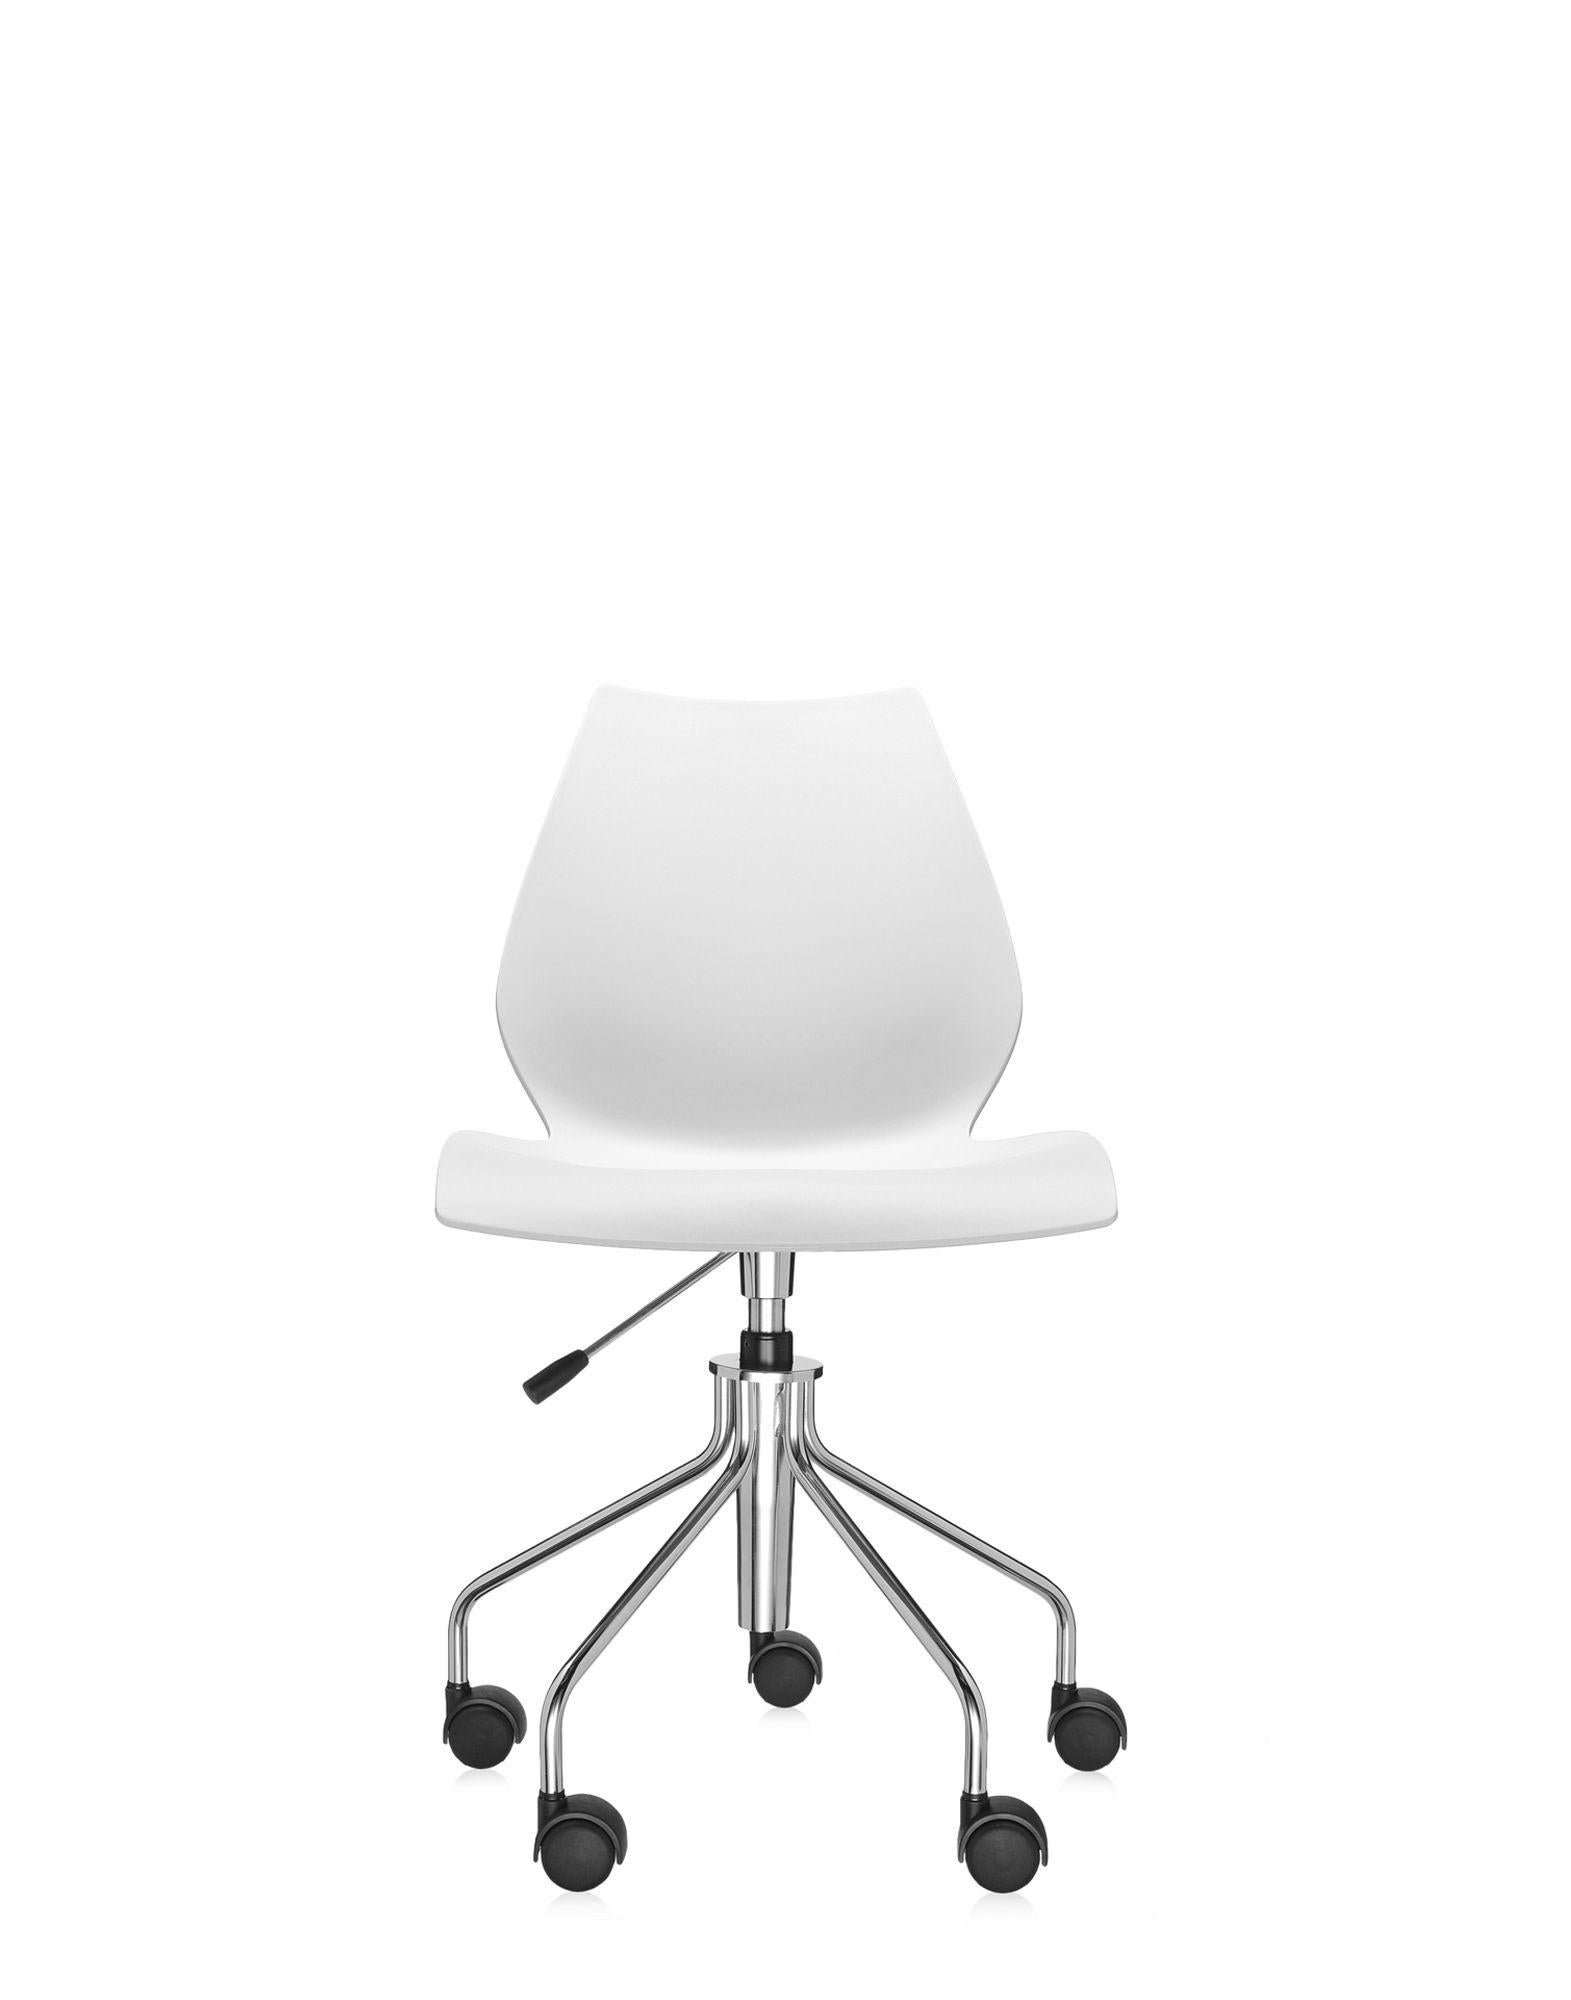 Italian Kartell Maui Swivel Chair Adjustable in Zinc White by Vico Magistretti